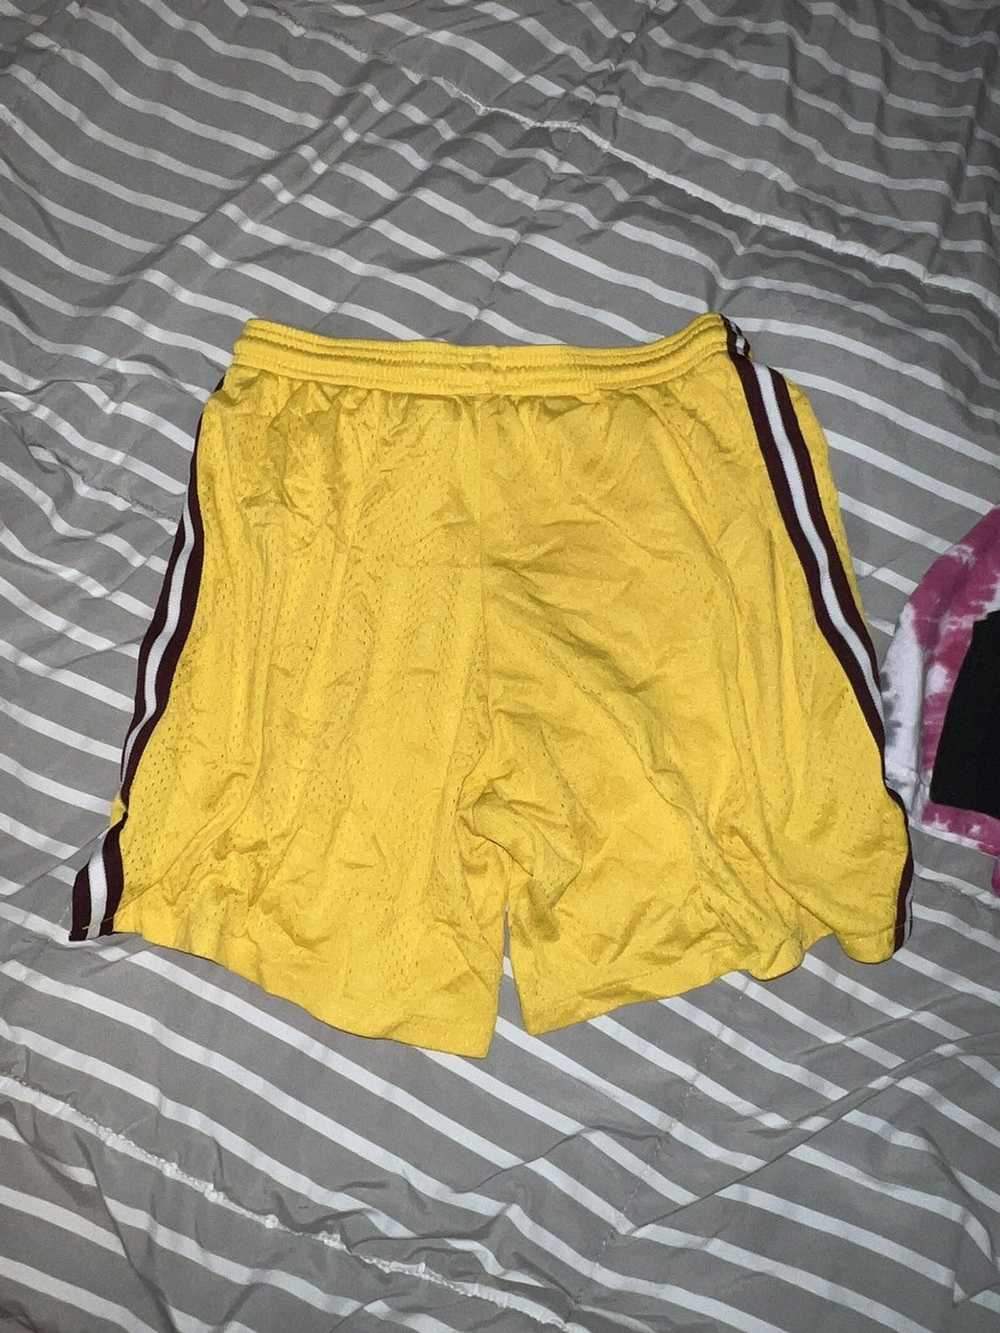 Vintage Vintage Yellow Lacrosse Shorts - image 2